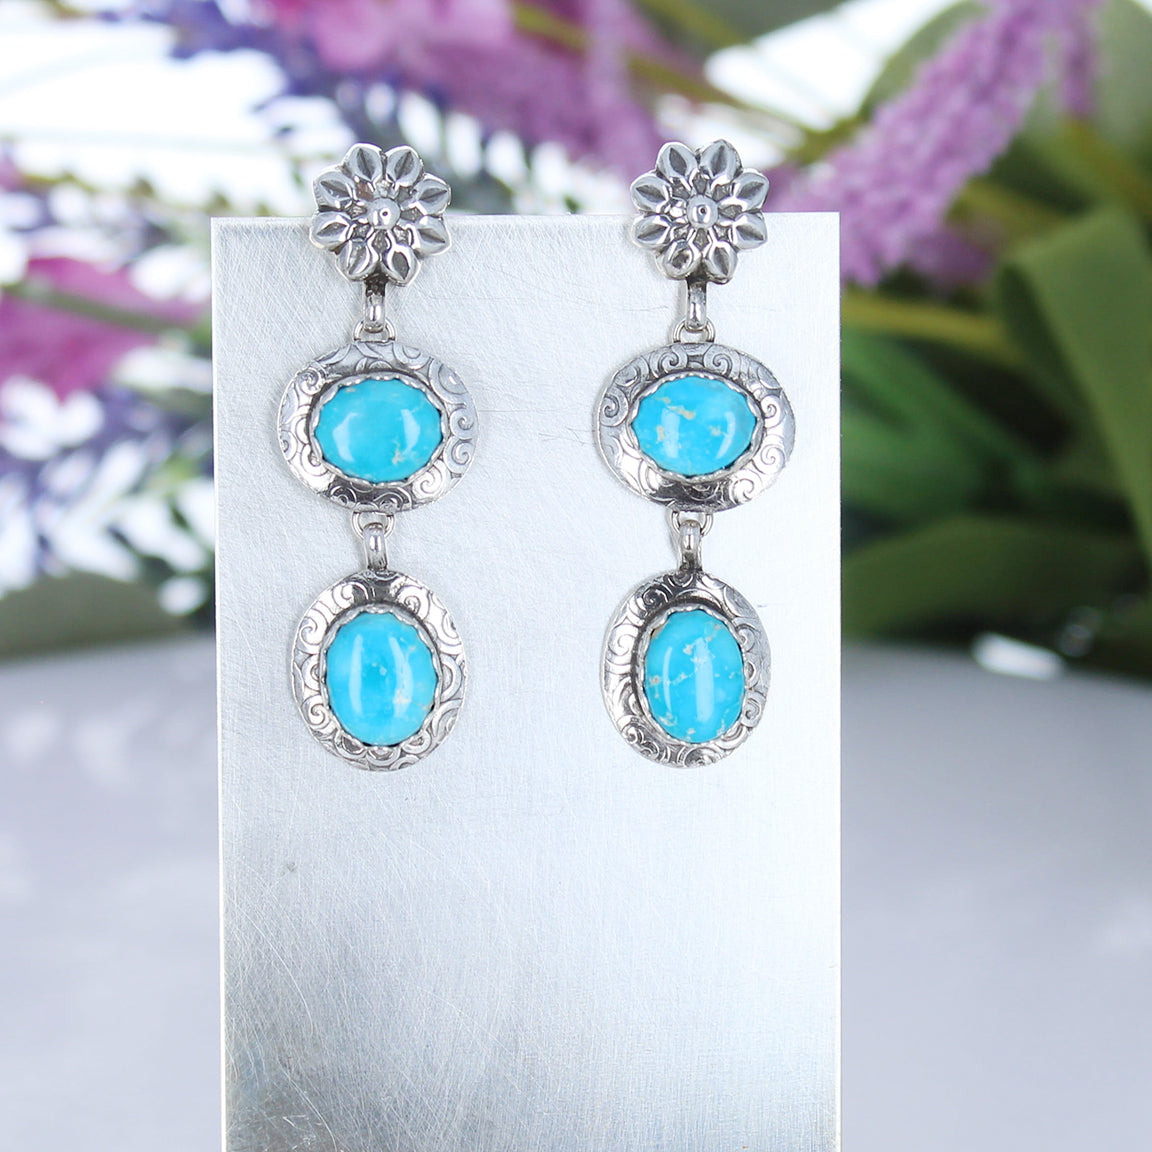 Blue Bird Turquoise Earrings 2 Stone Sky Blue Spiral Design Sterling